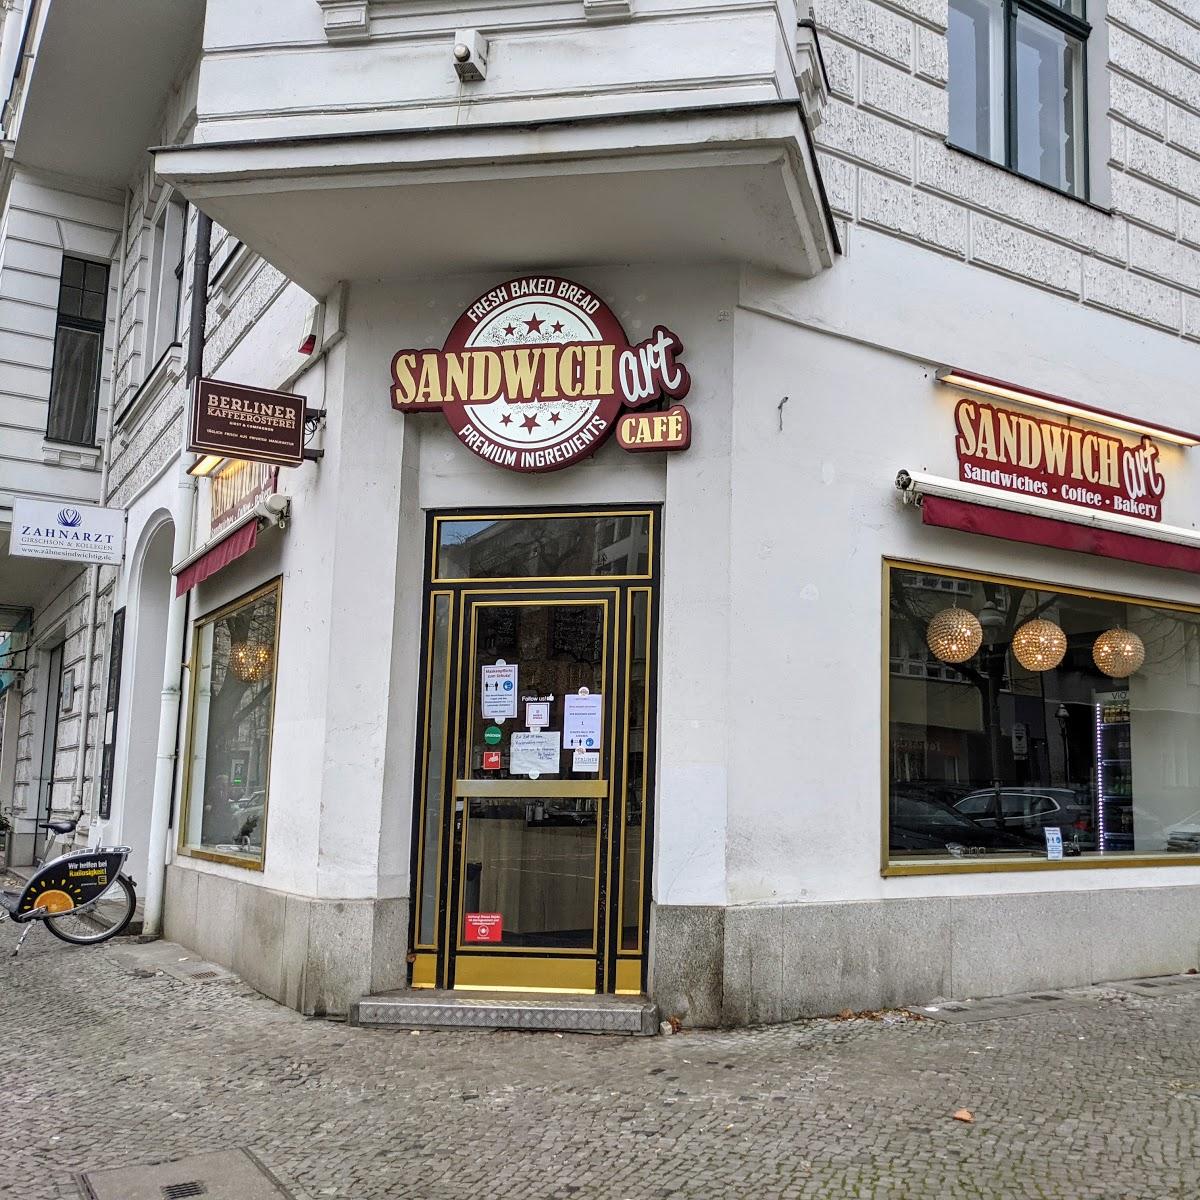 Restaurant "SANDWICHart CAFE" in Berlin